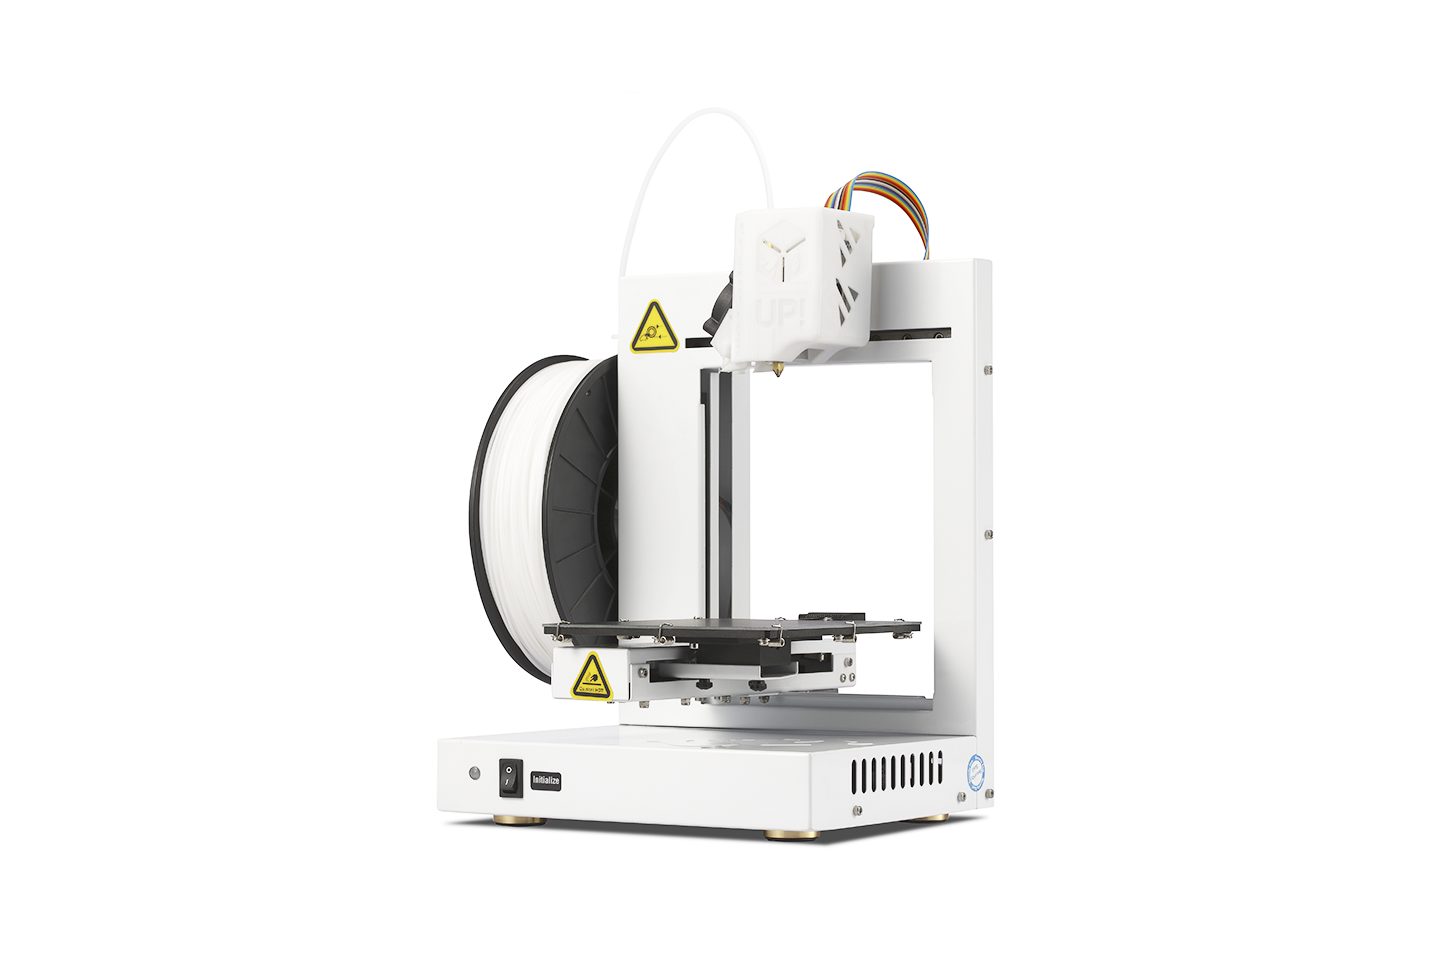 UP Plus 2 desktop 3D printer